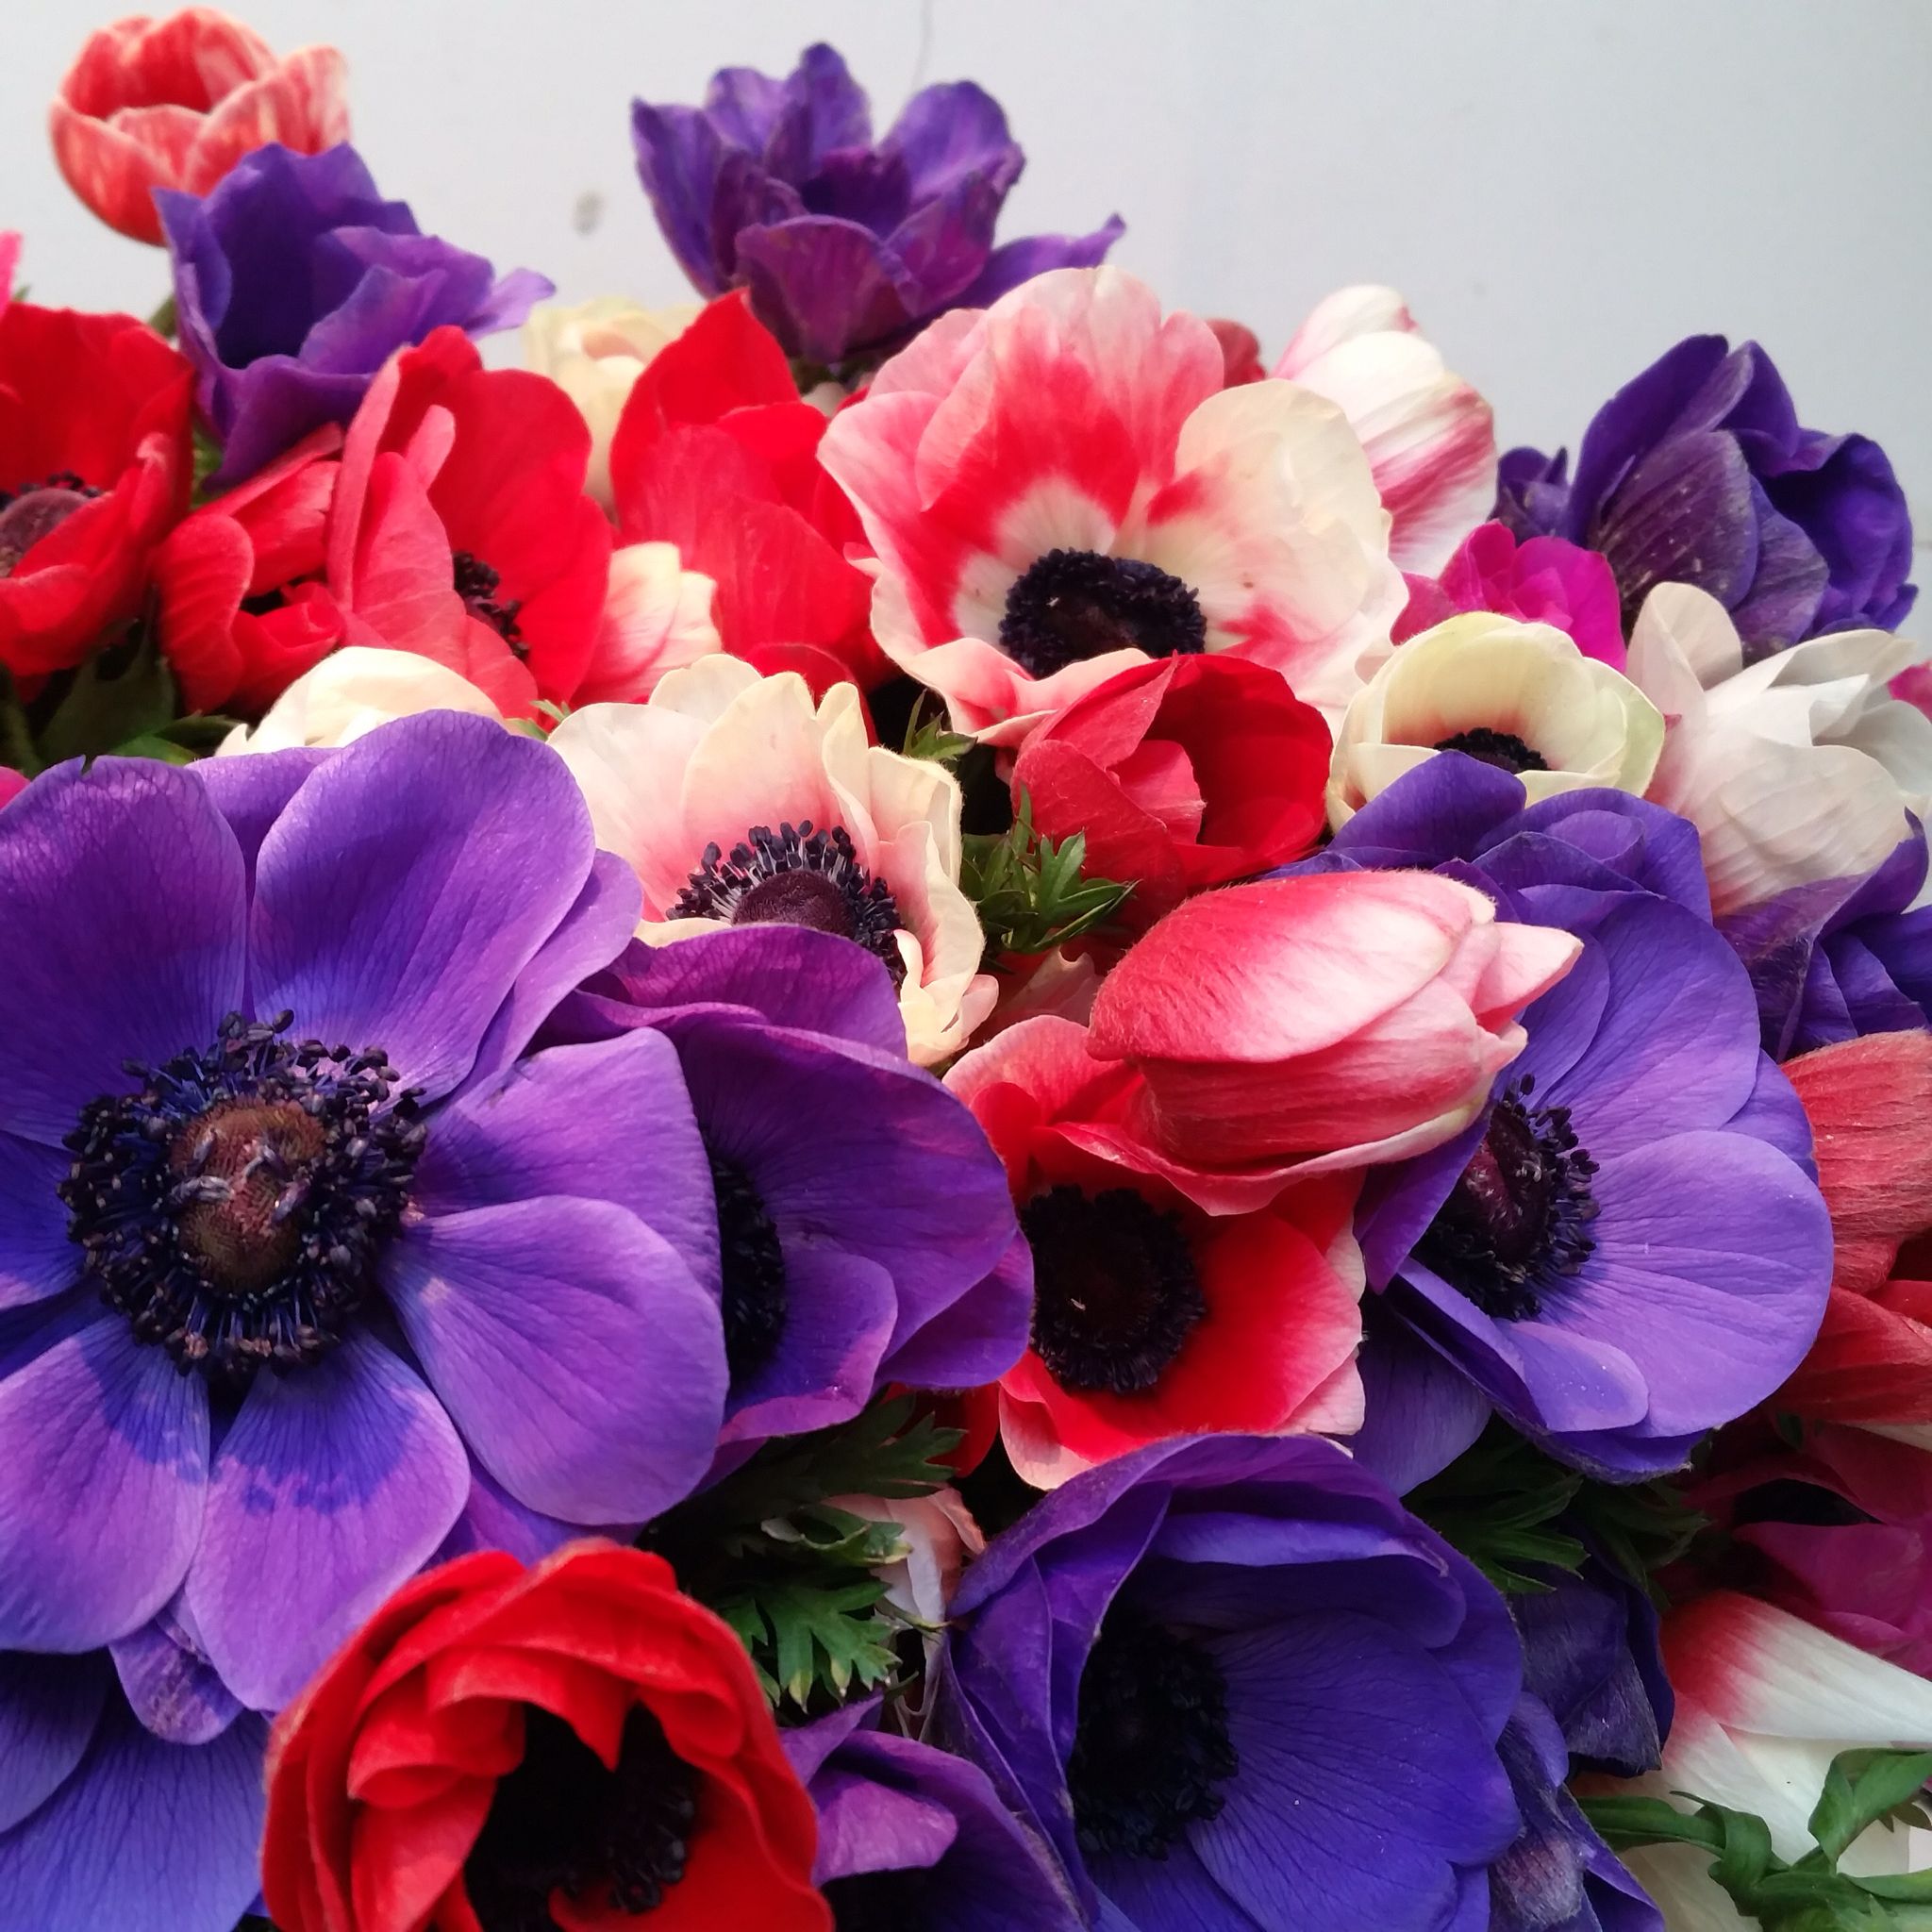 Cornish anemones | Spring Bouquets 2015 | Pinterest